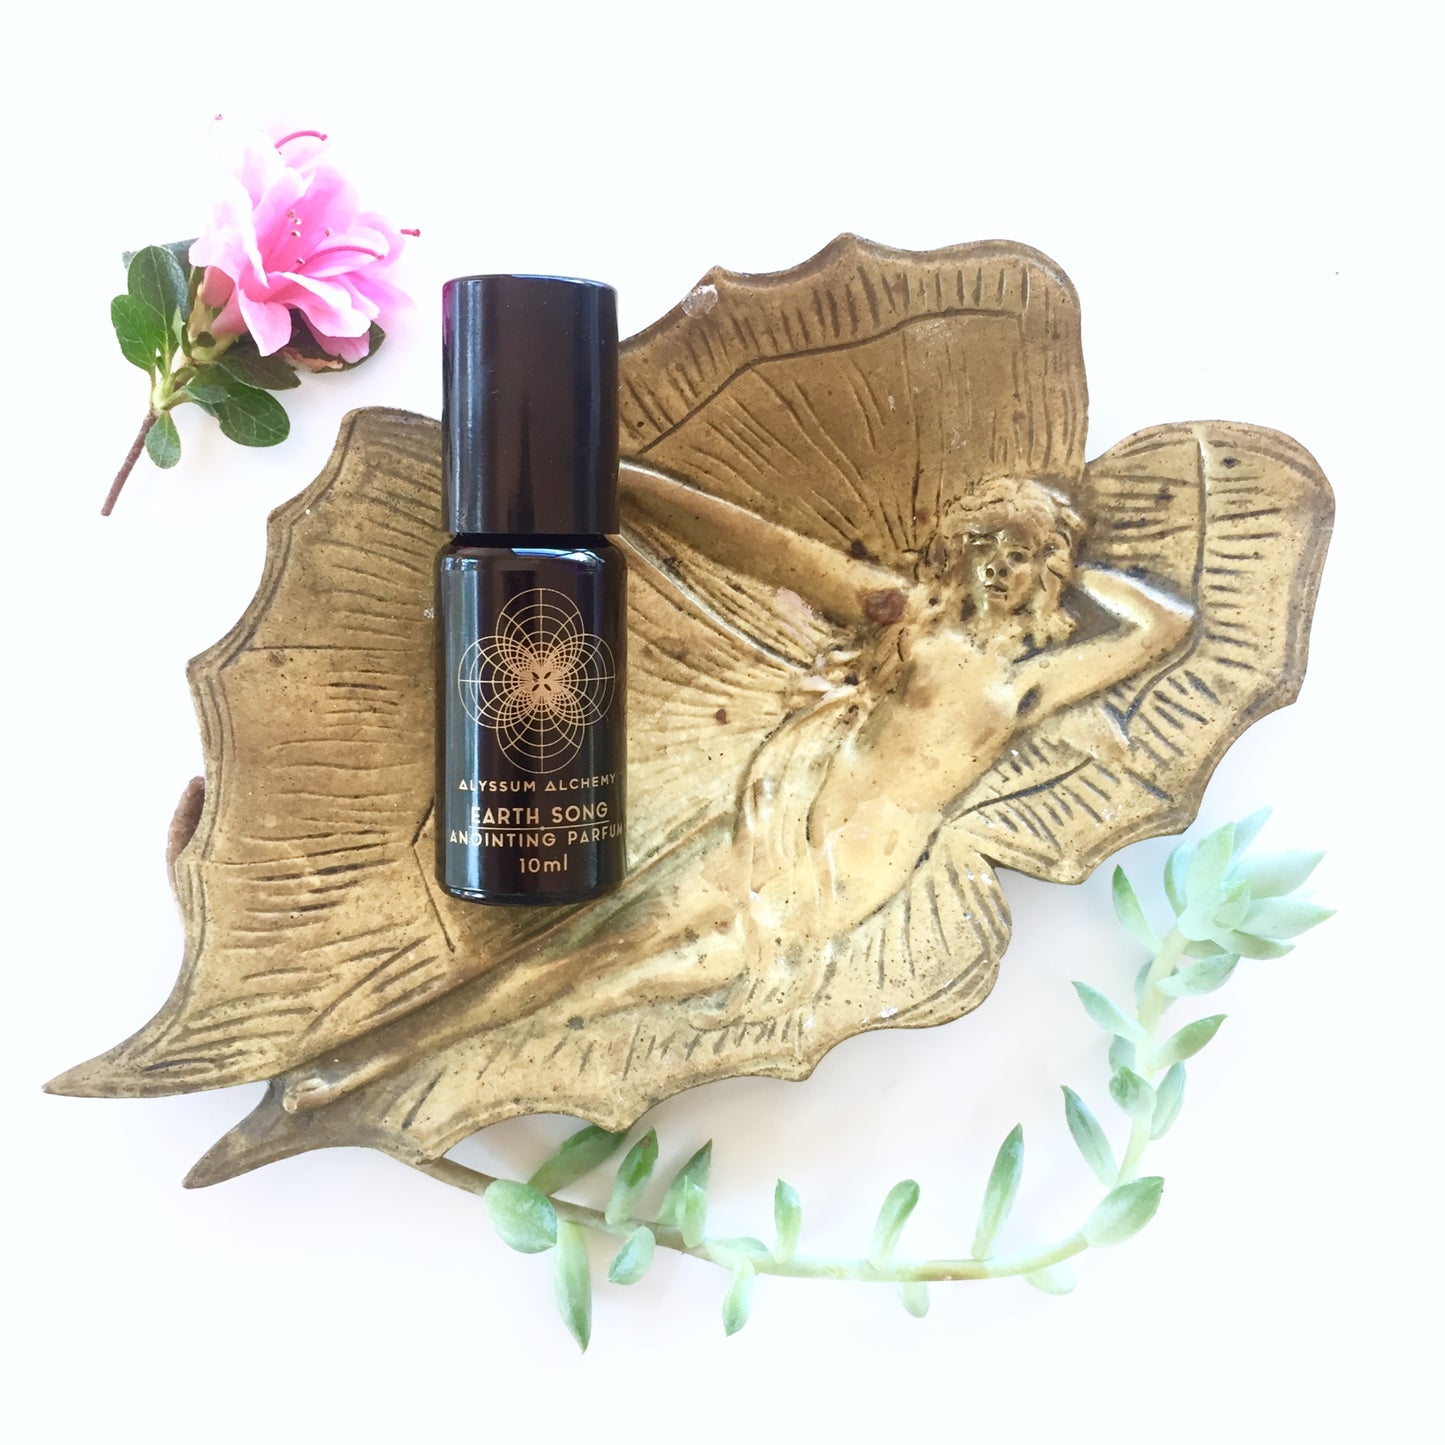 Earth Song Anointing Parfum - Organic Botanical Perfume Oil